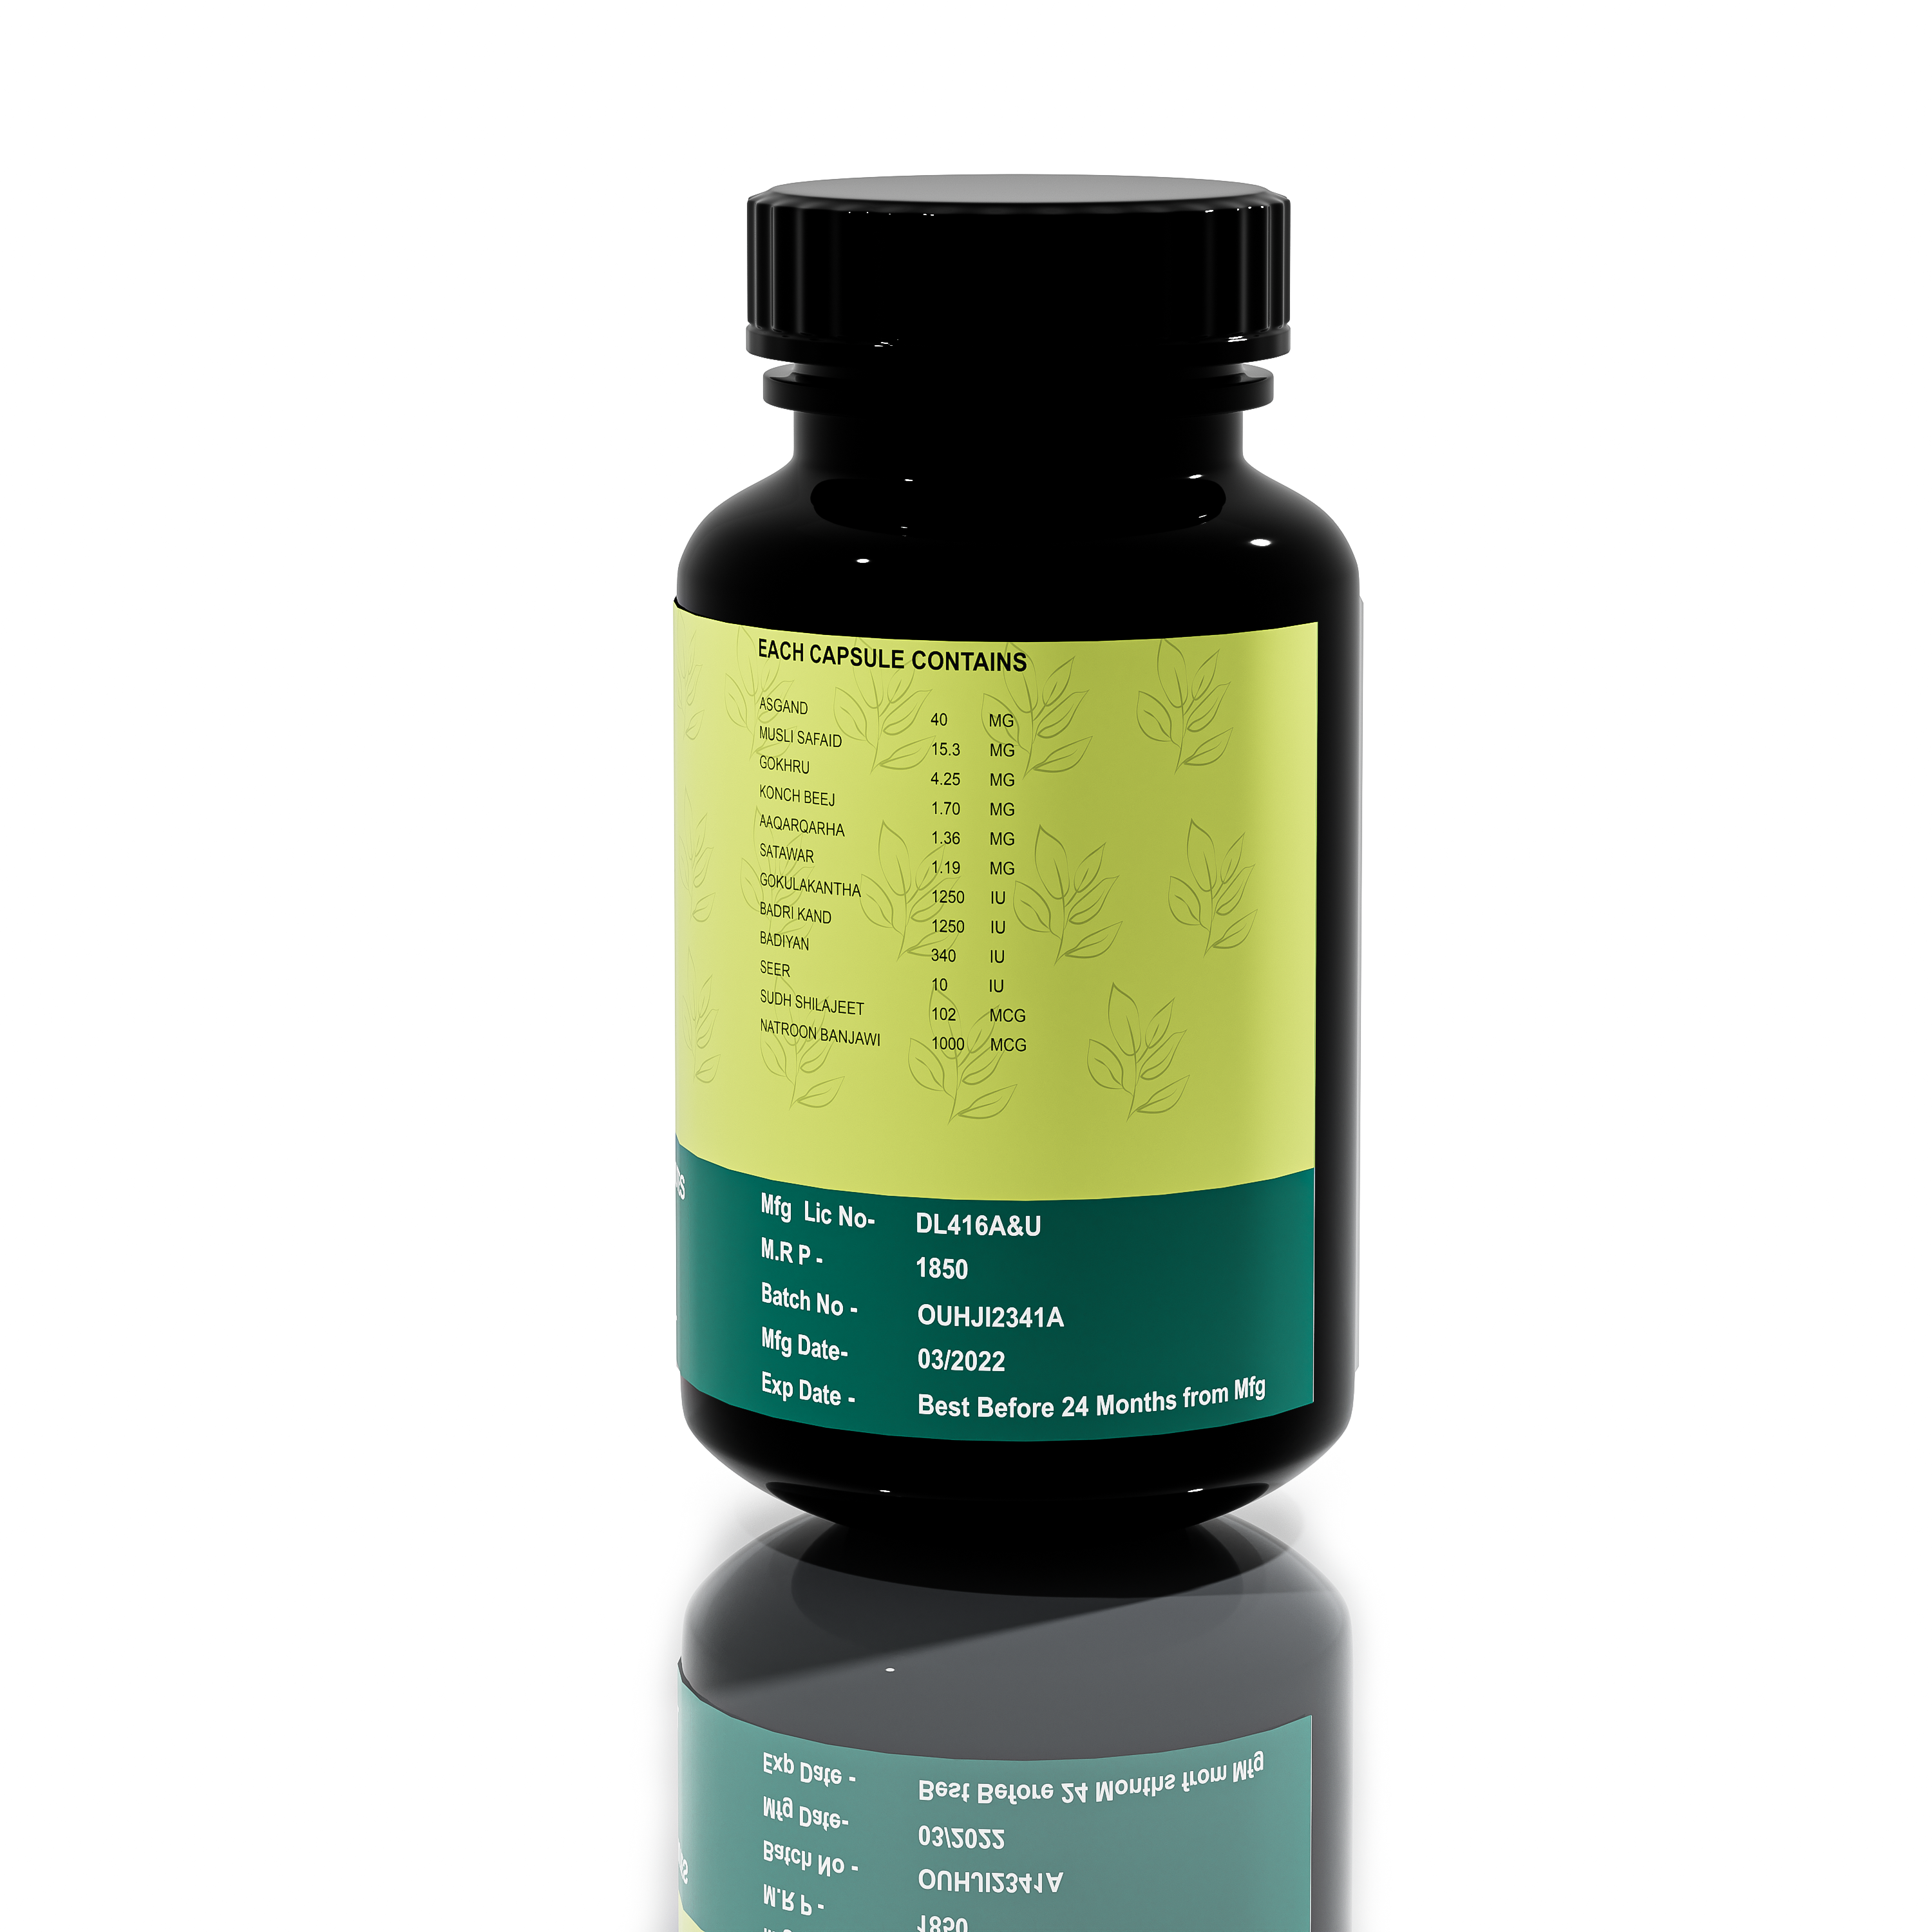 Herbal Pharmacy NITRO X  Performance Capsule (Ayurvedic Stamina Booster) (60 Capsules)